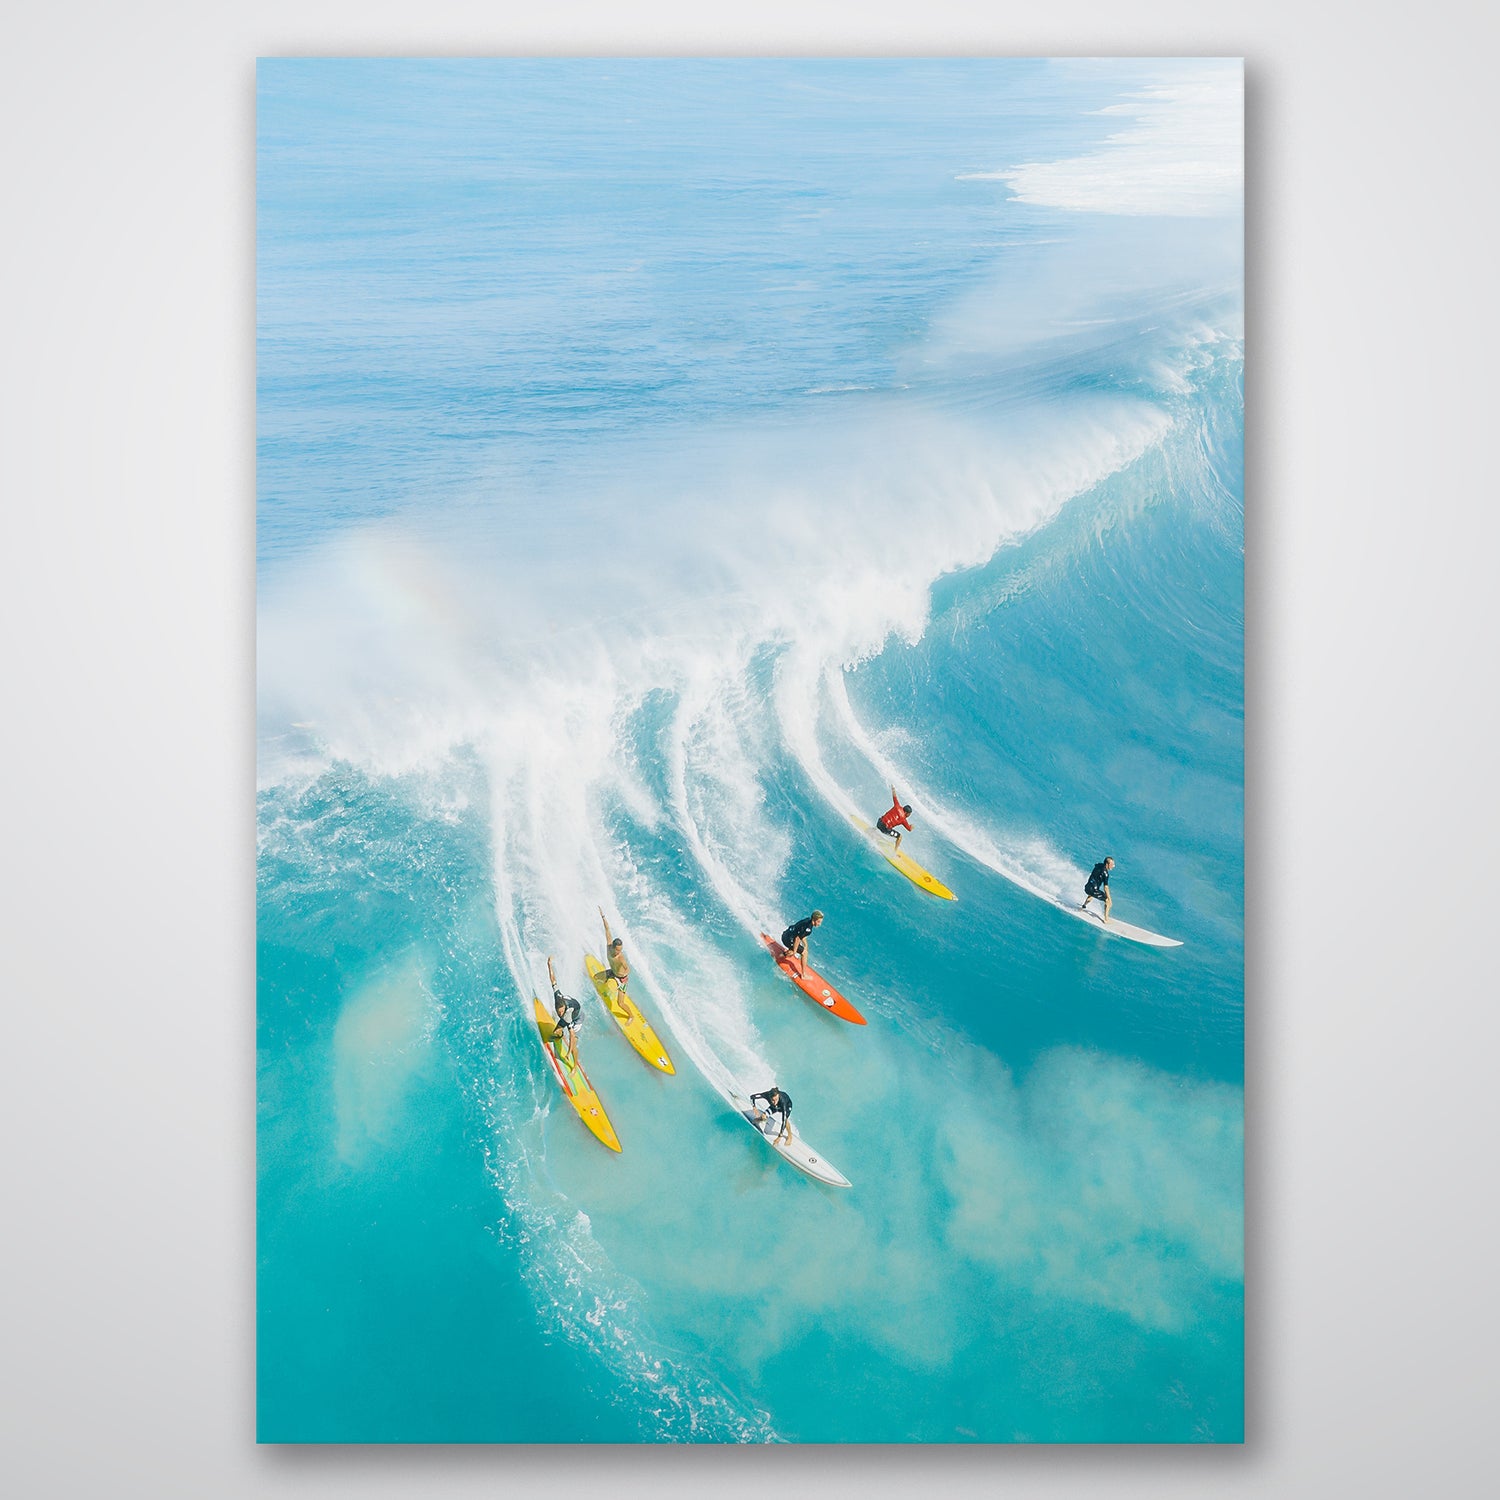 Kona Surfing - Print